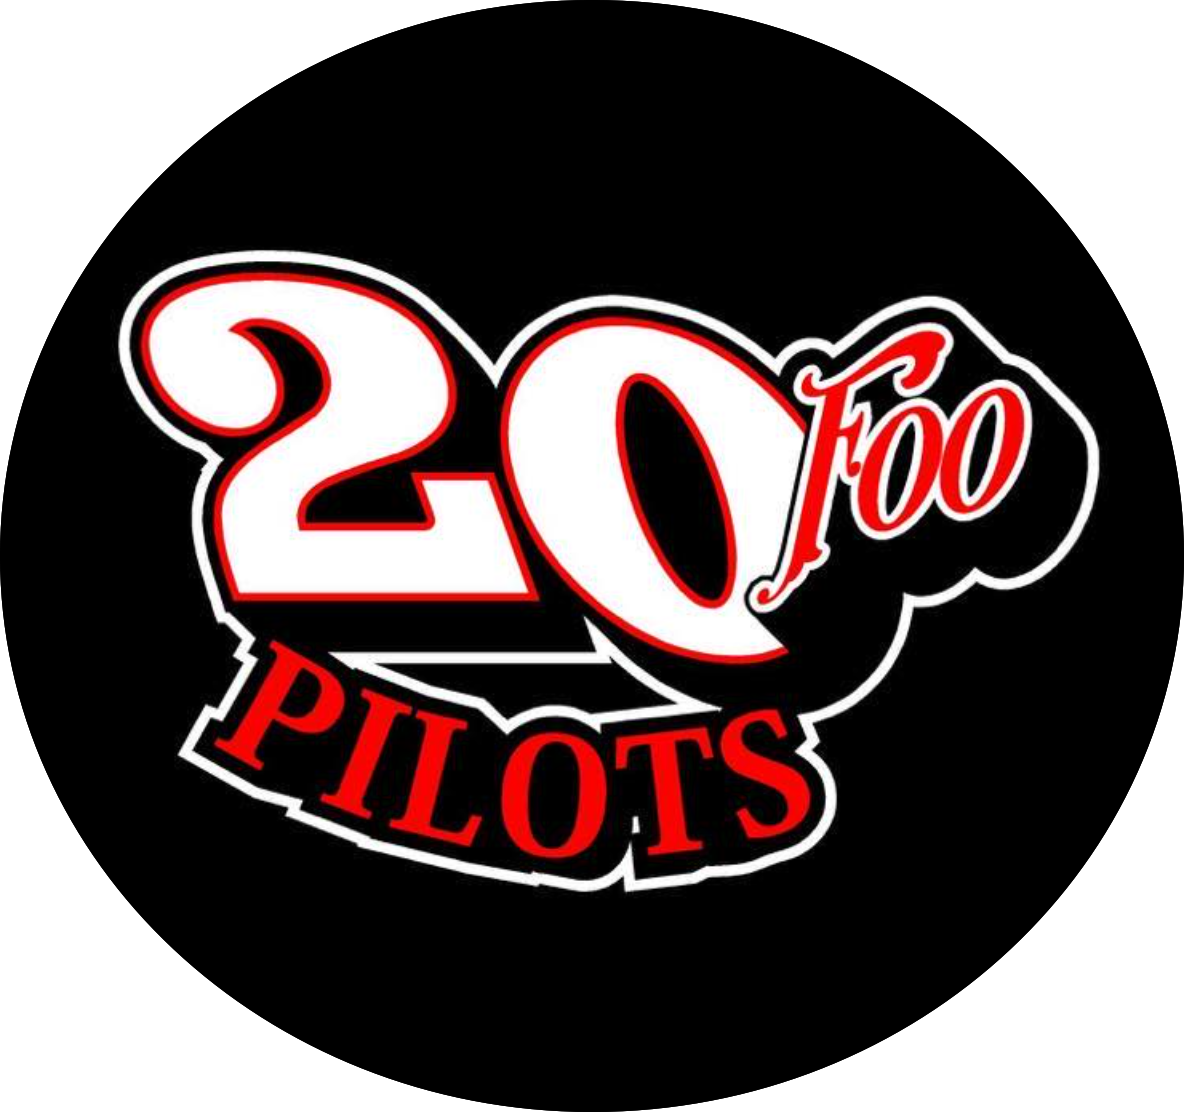 20Food Pilots